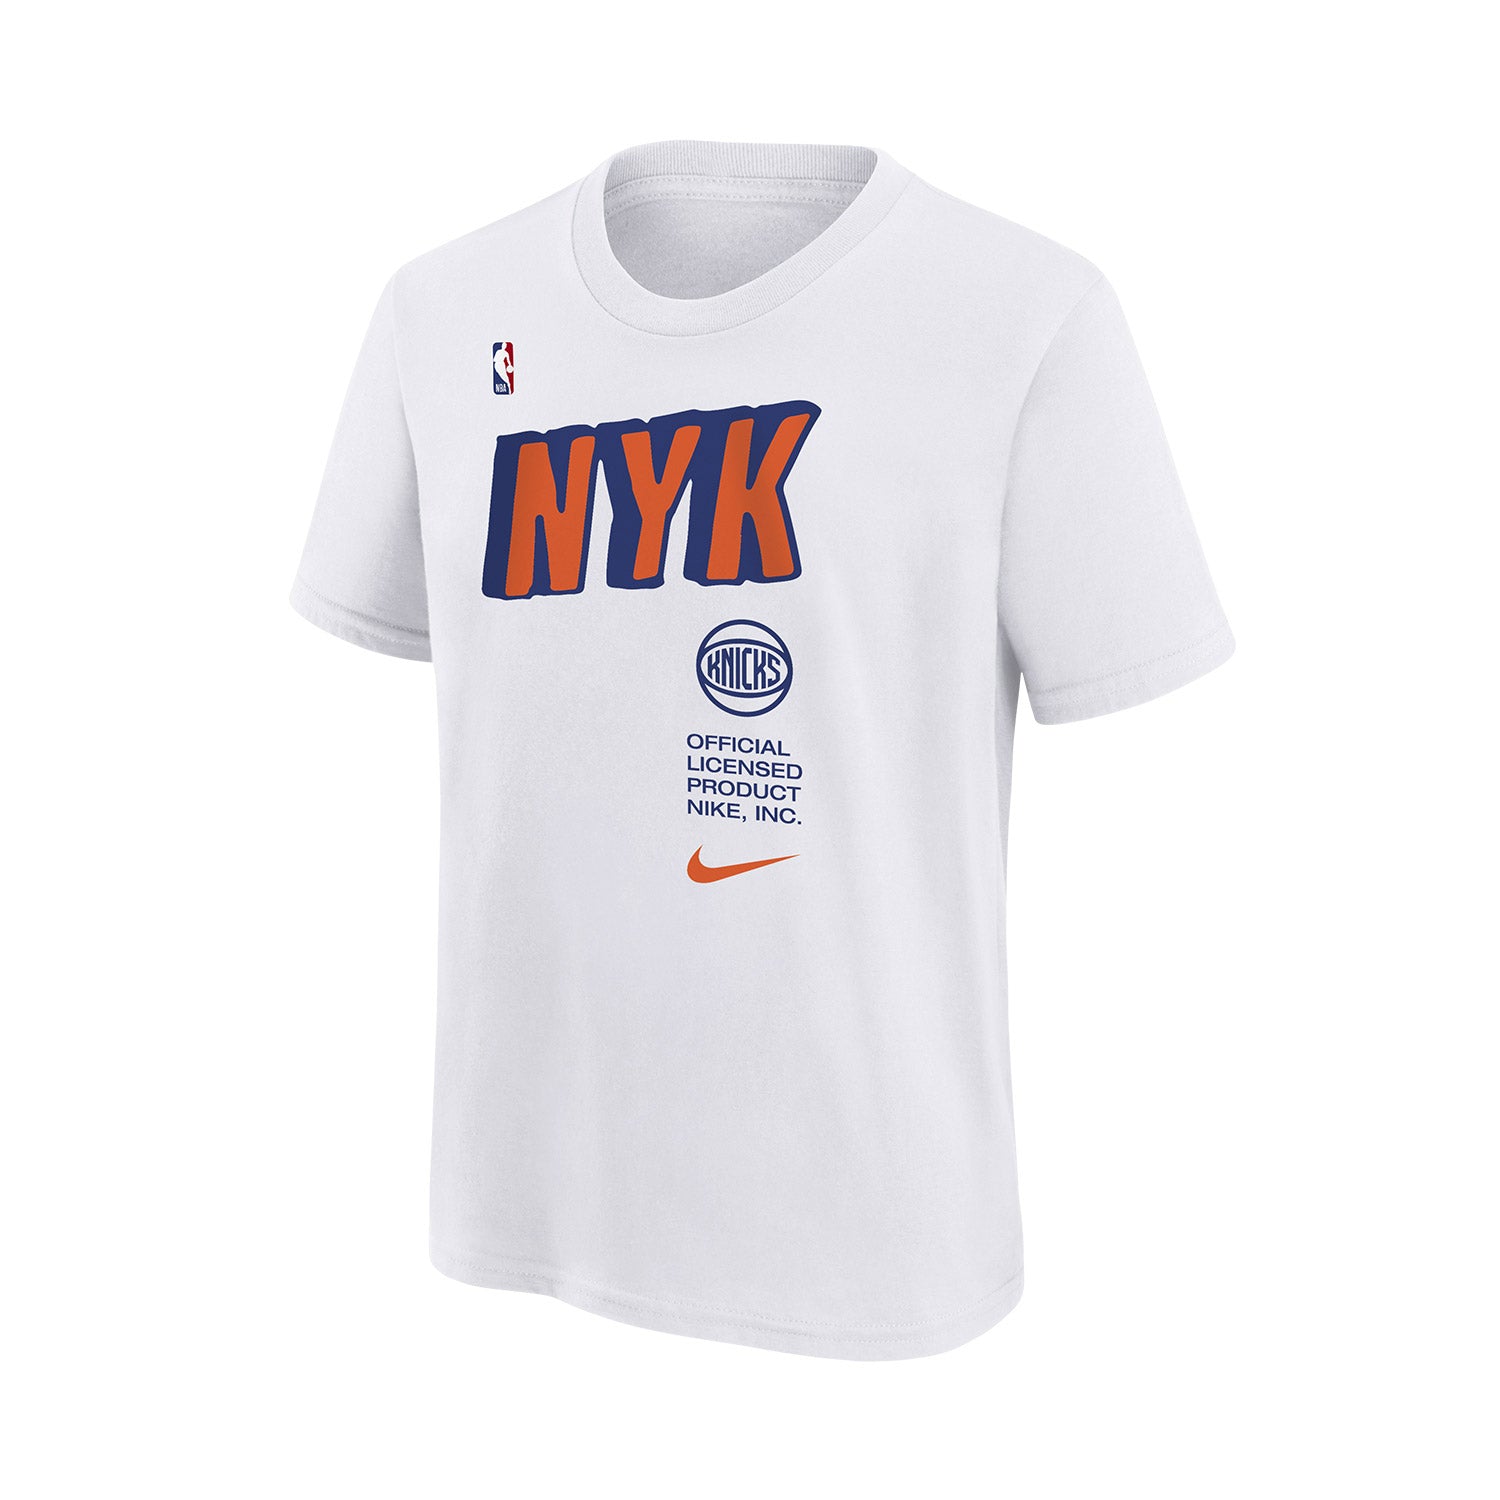 Kids Nike Knicks Essential Block NYK Cotton Tee In White, Orange & Blue - Front View